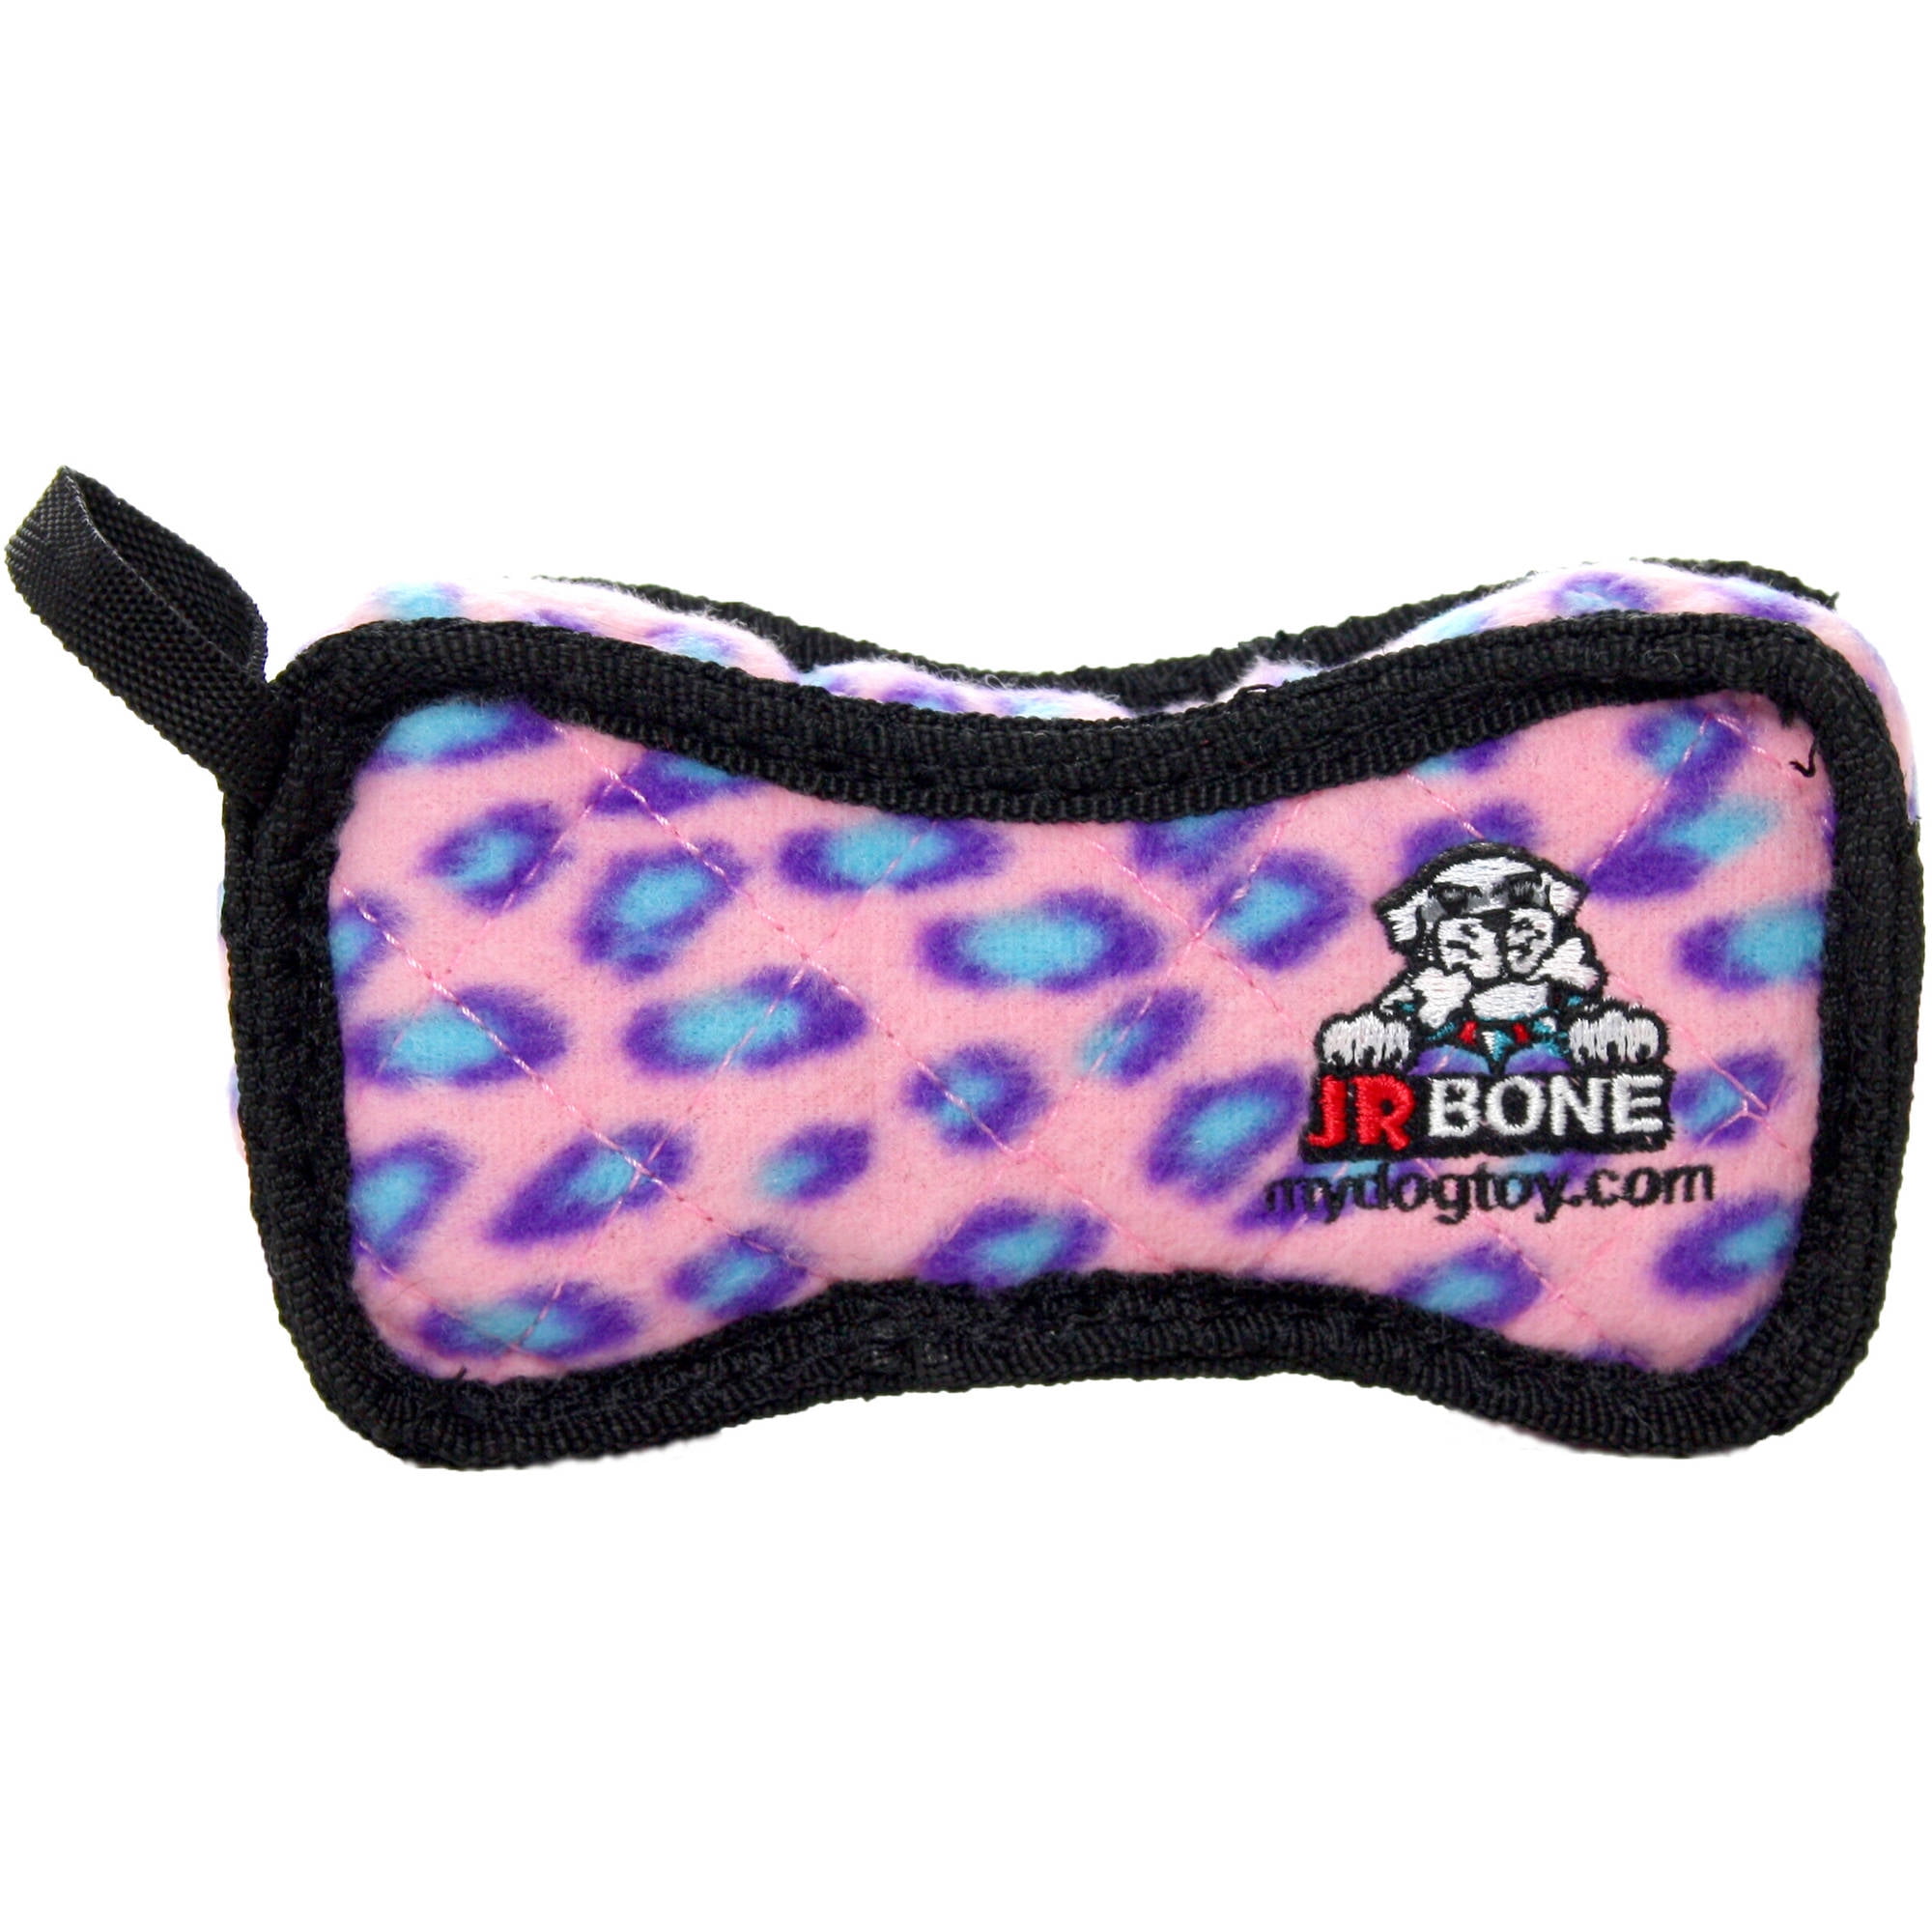 Tuffy Fish Dog Toy Leopard Junior Pink